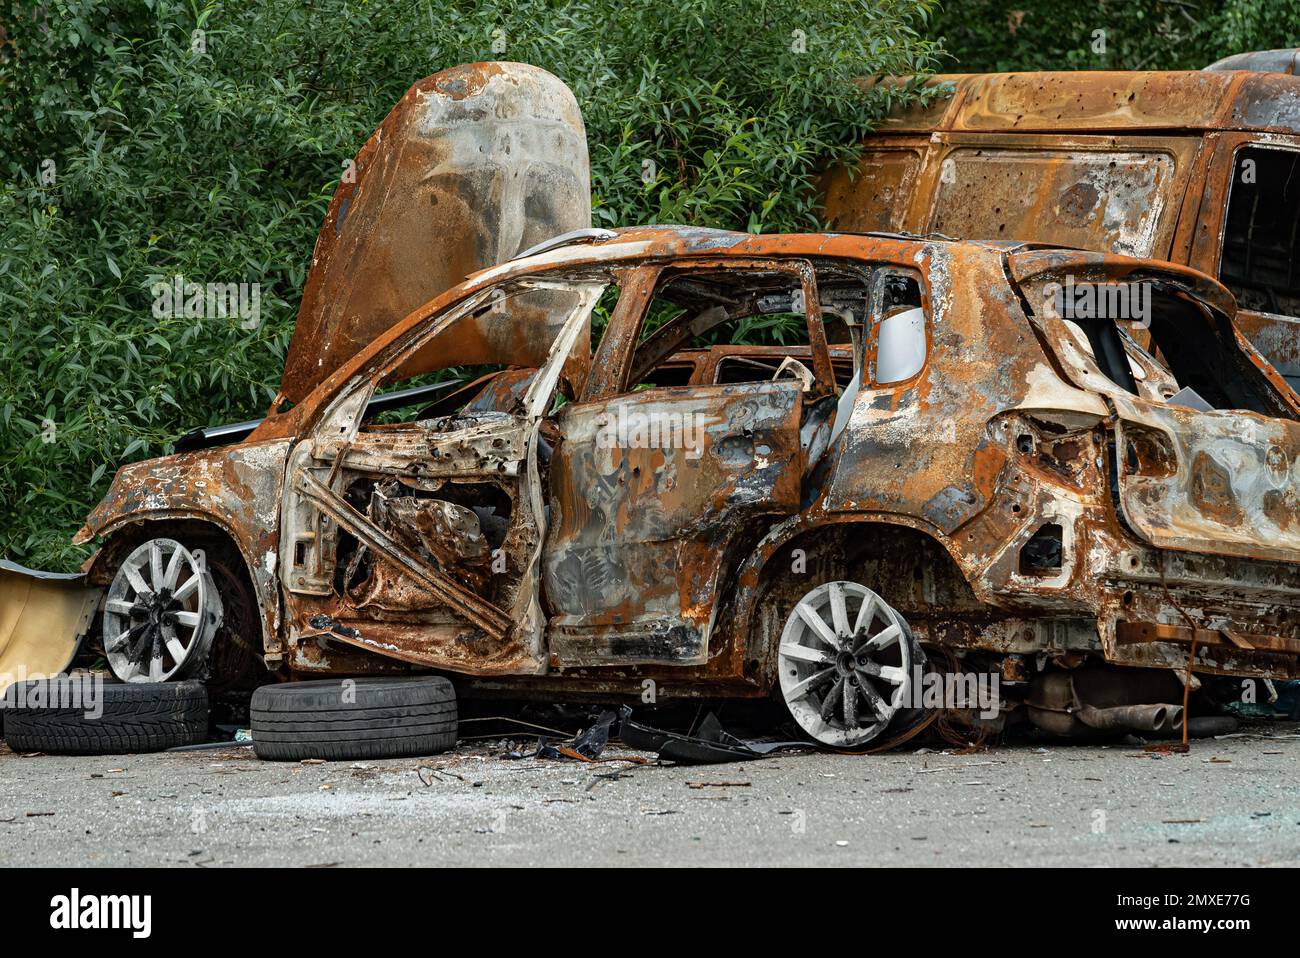 Dump of war-destroyed cars in Ukraine Stock Photo